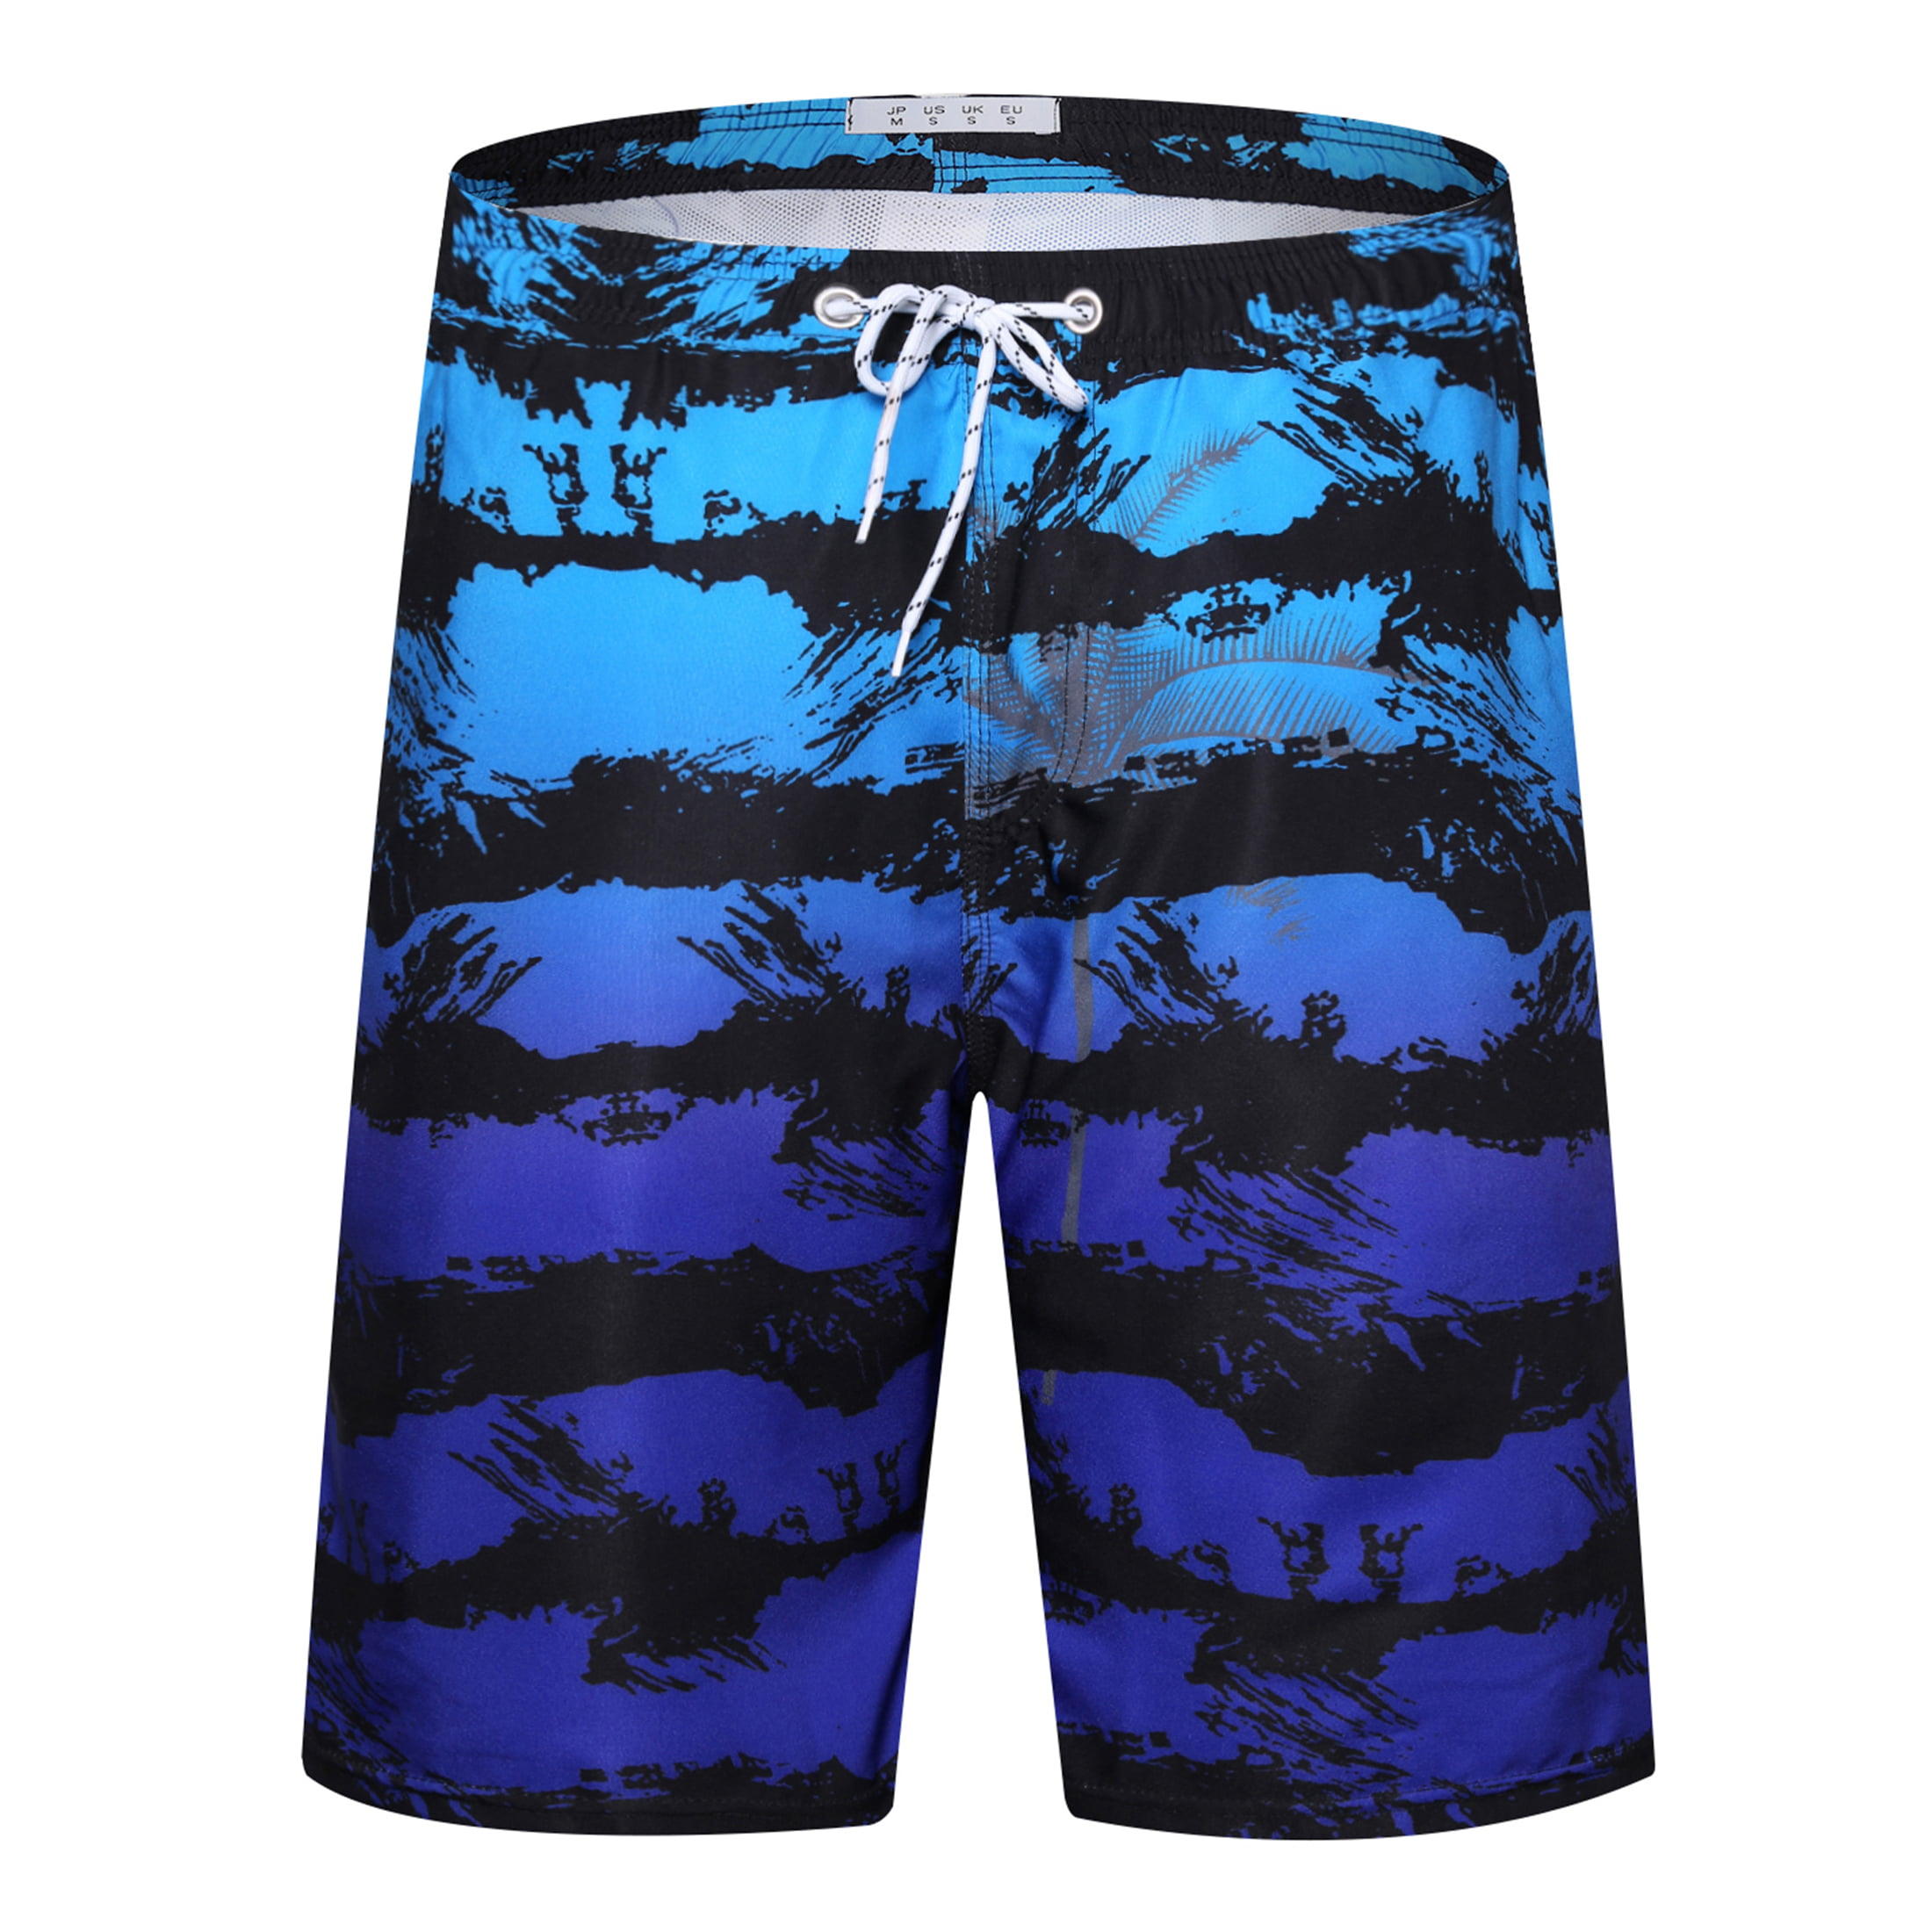 APTRO Men's Swim Trunks Long Bathing Suits Beach Swim Board Shorts